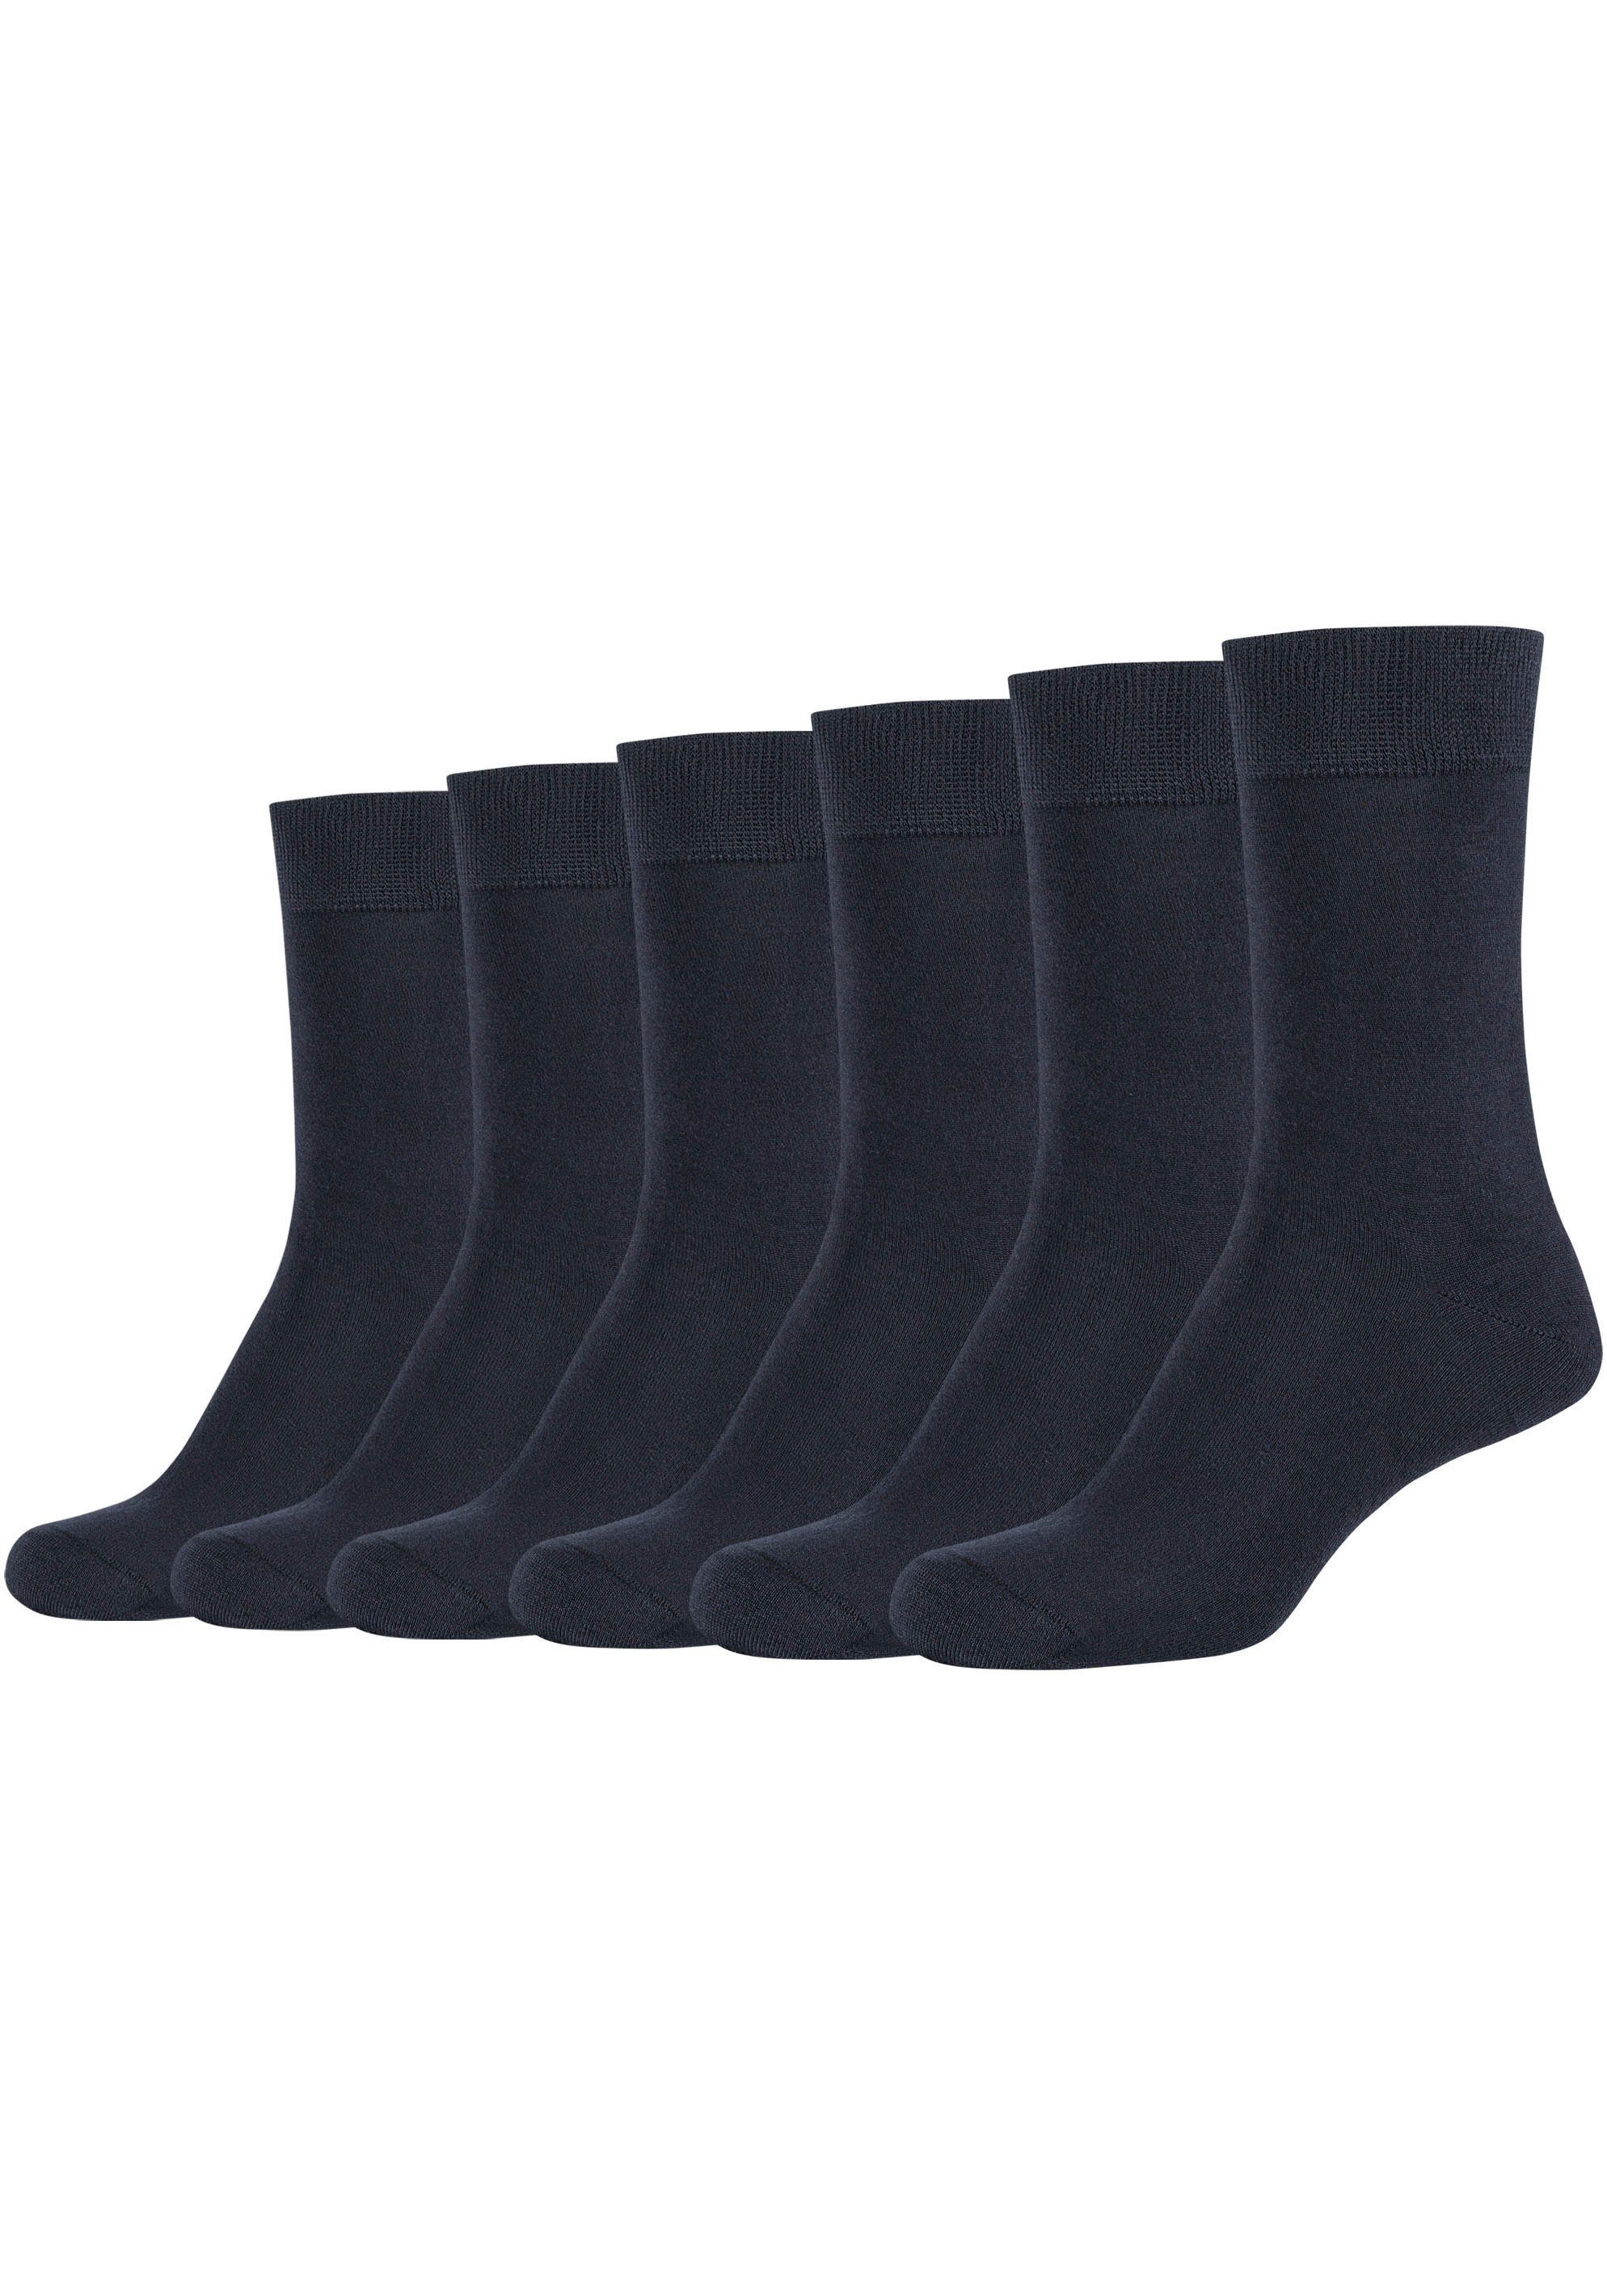 Camano Socken (Packung, 6-Paar) Mit hangekettelter Zehennaht dunkelblau